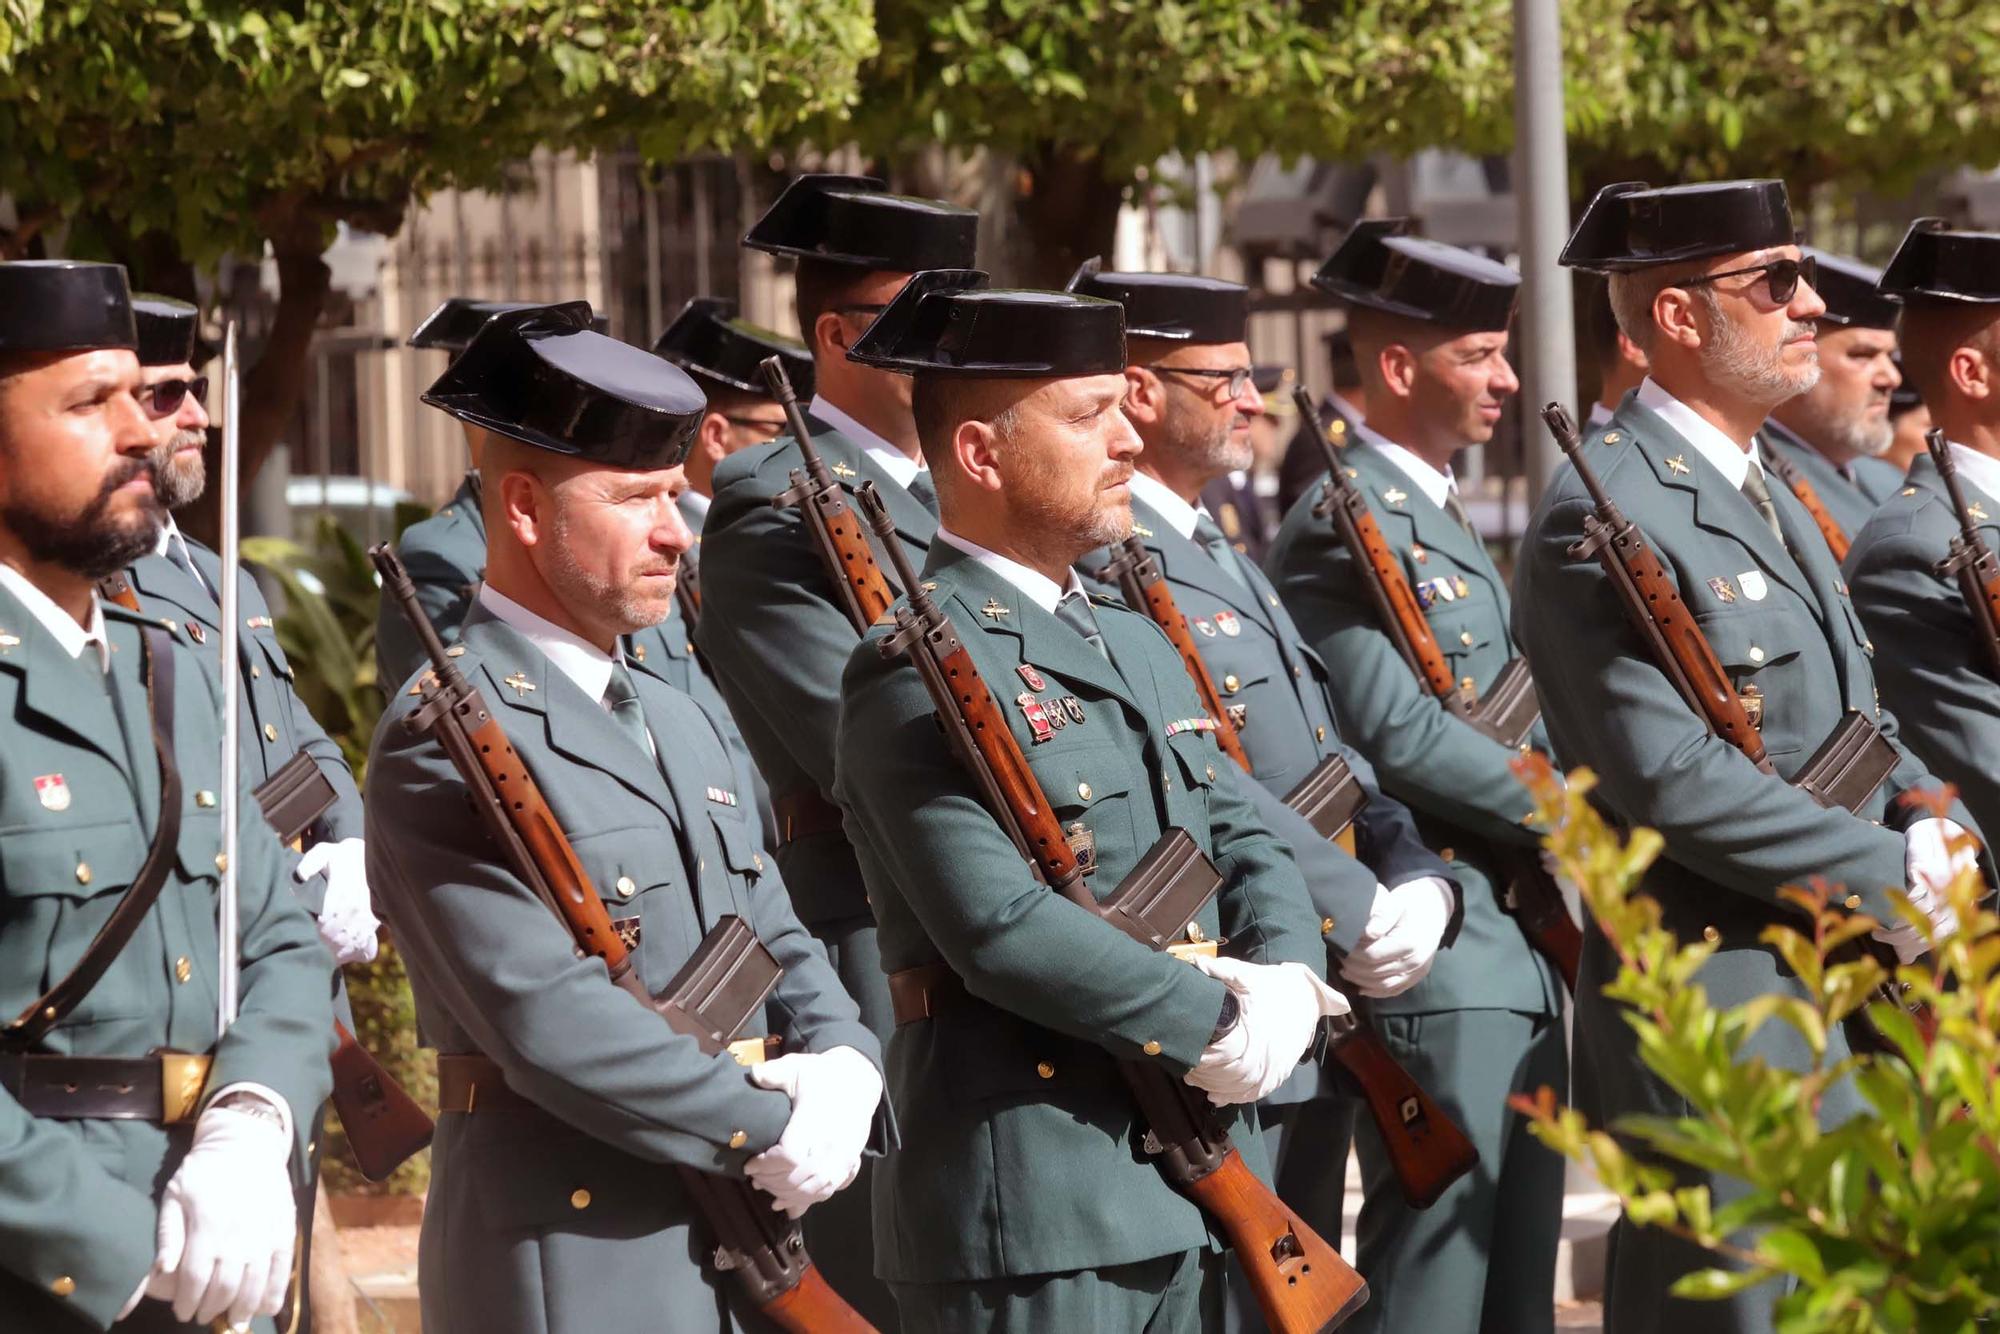 La Guardia Civil de Córdoba celebra el 178 aniversario del cuerpo